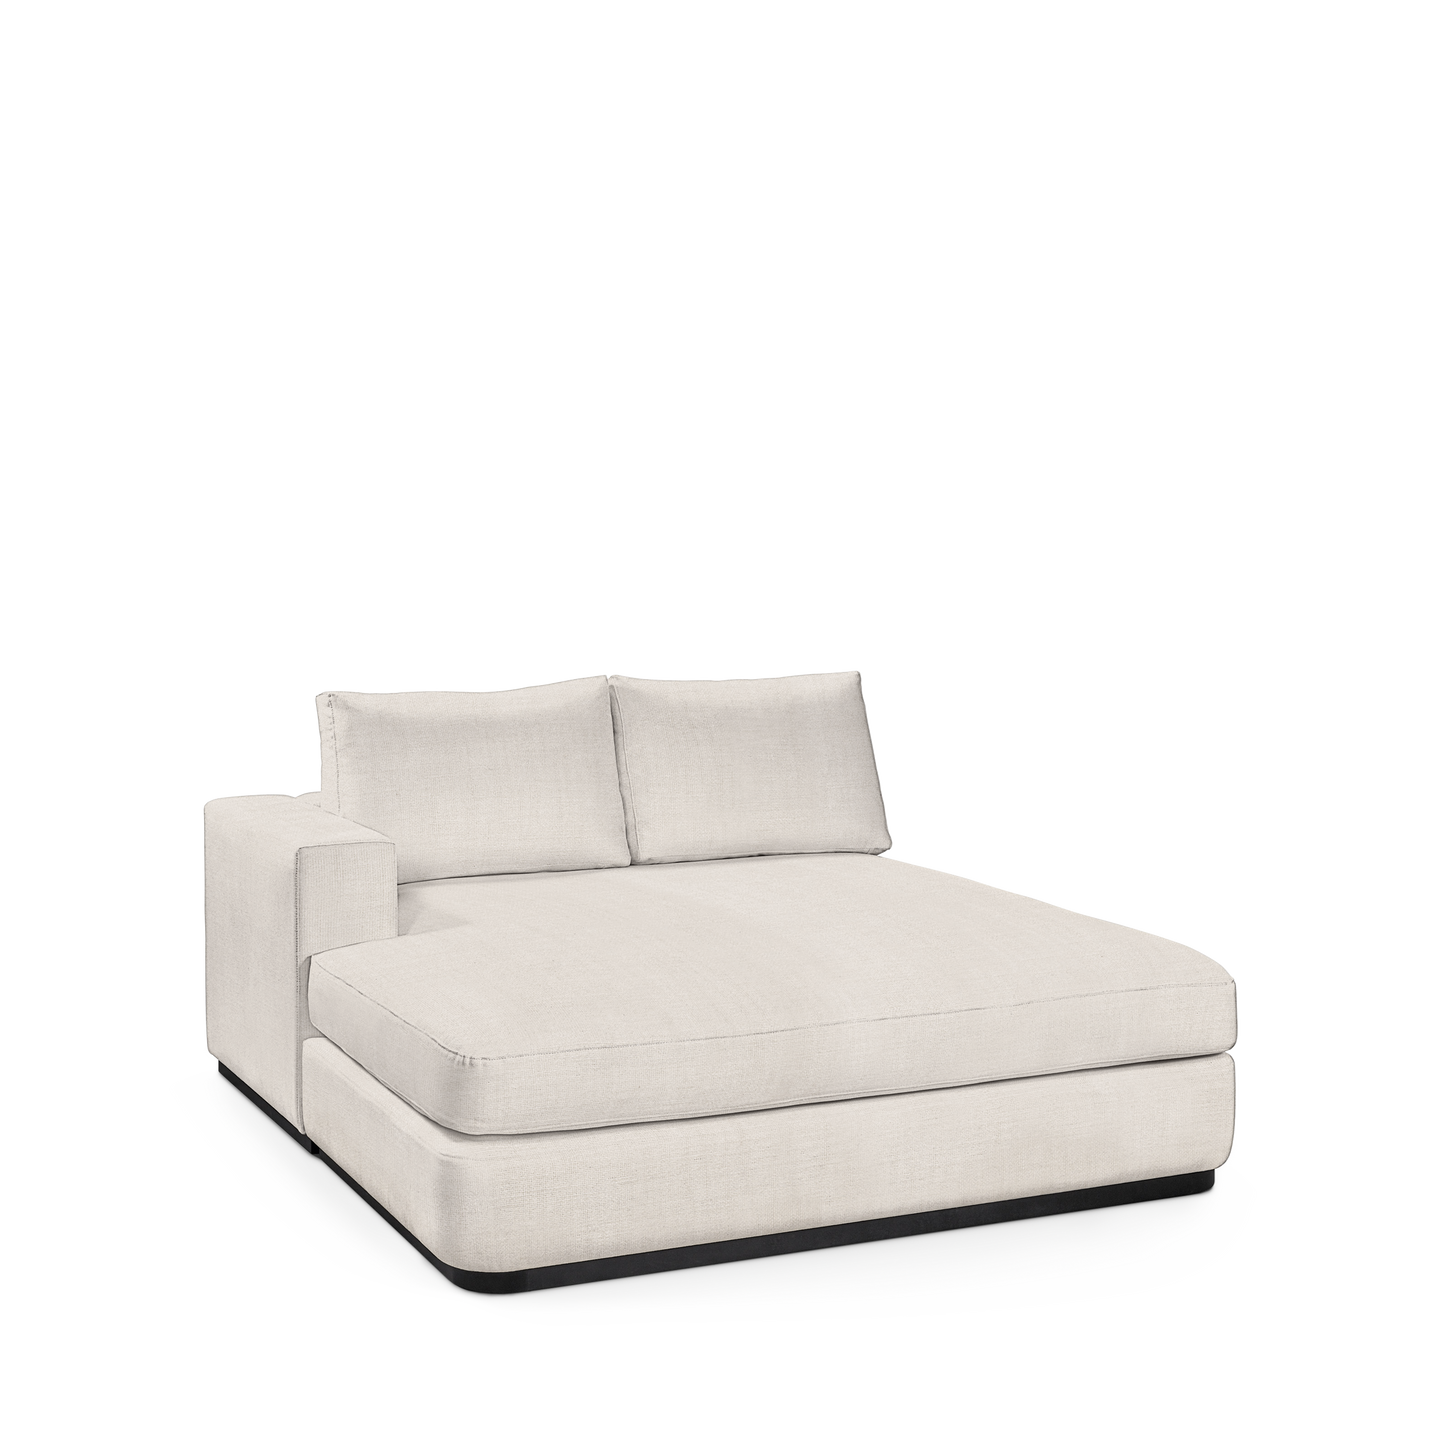 ATLAS 160 Lounge Bed arm rest left with light grey textile